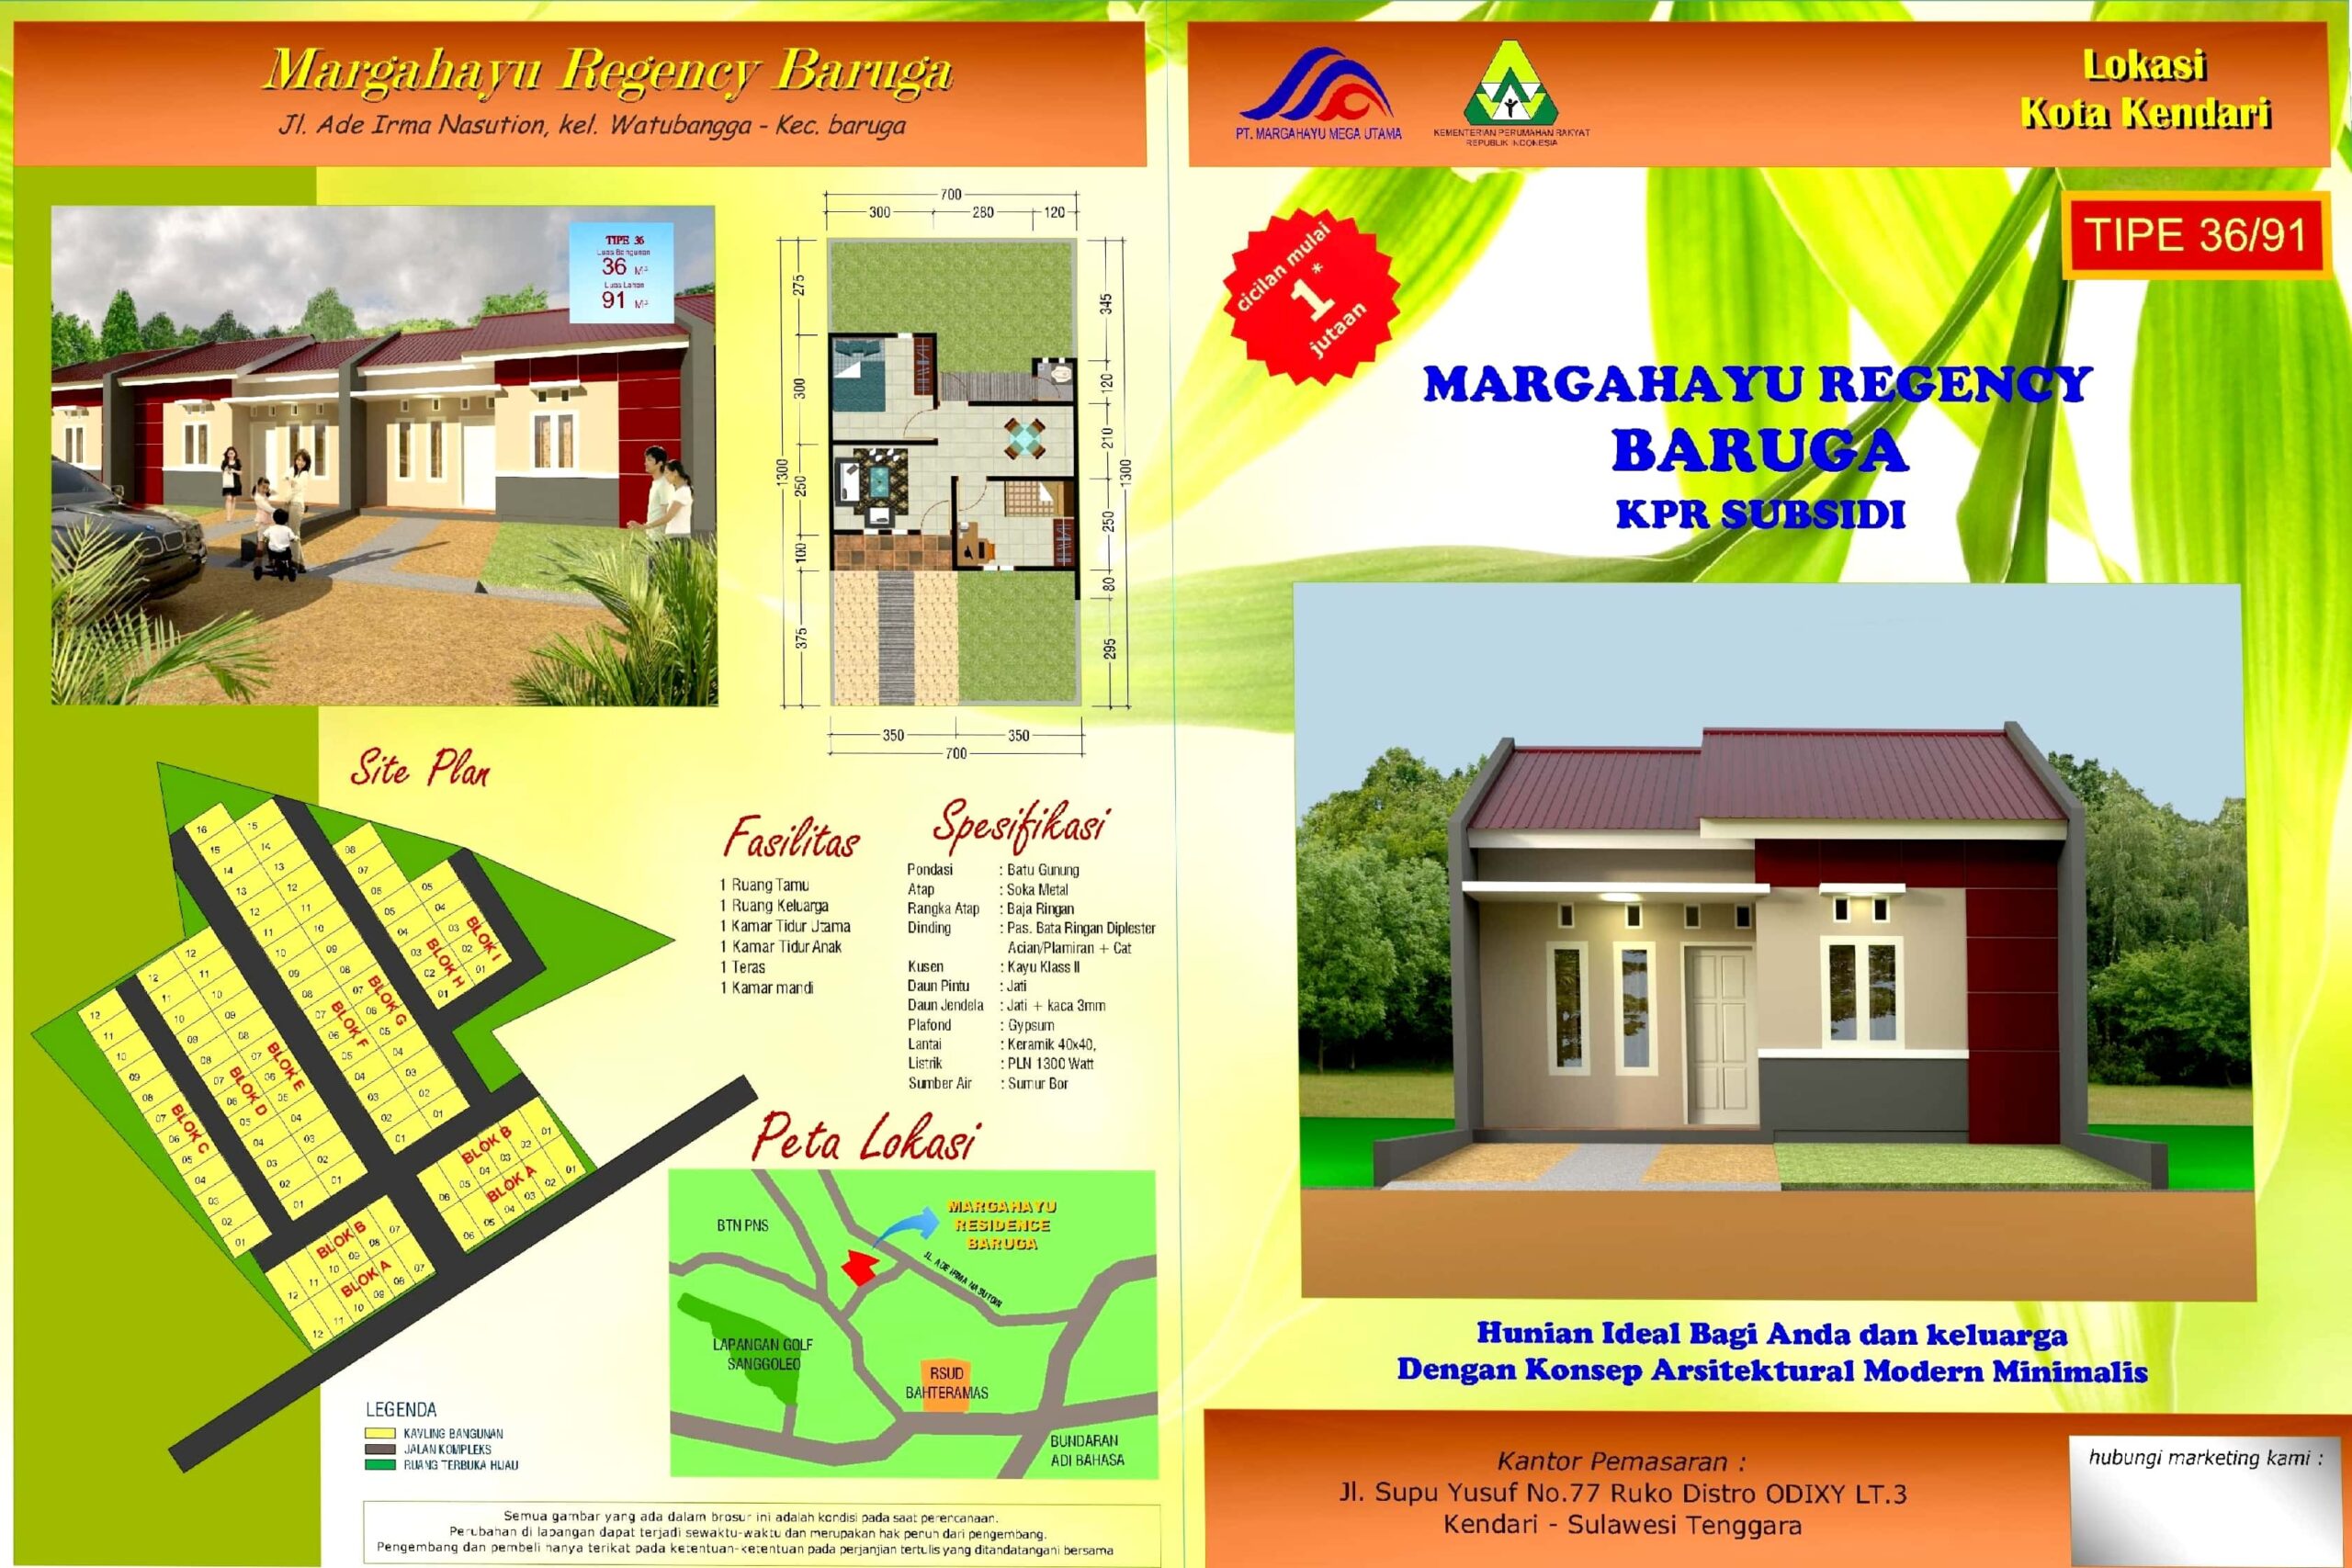 Margahayu Regency Baruga